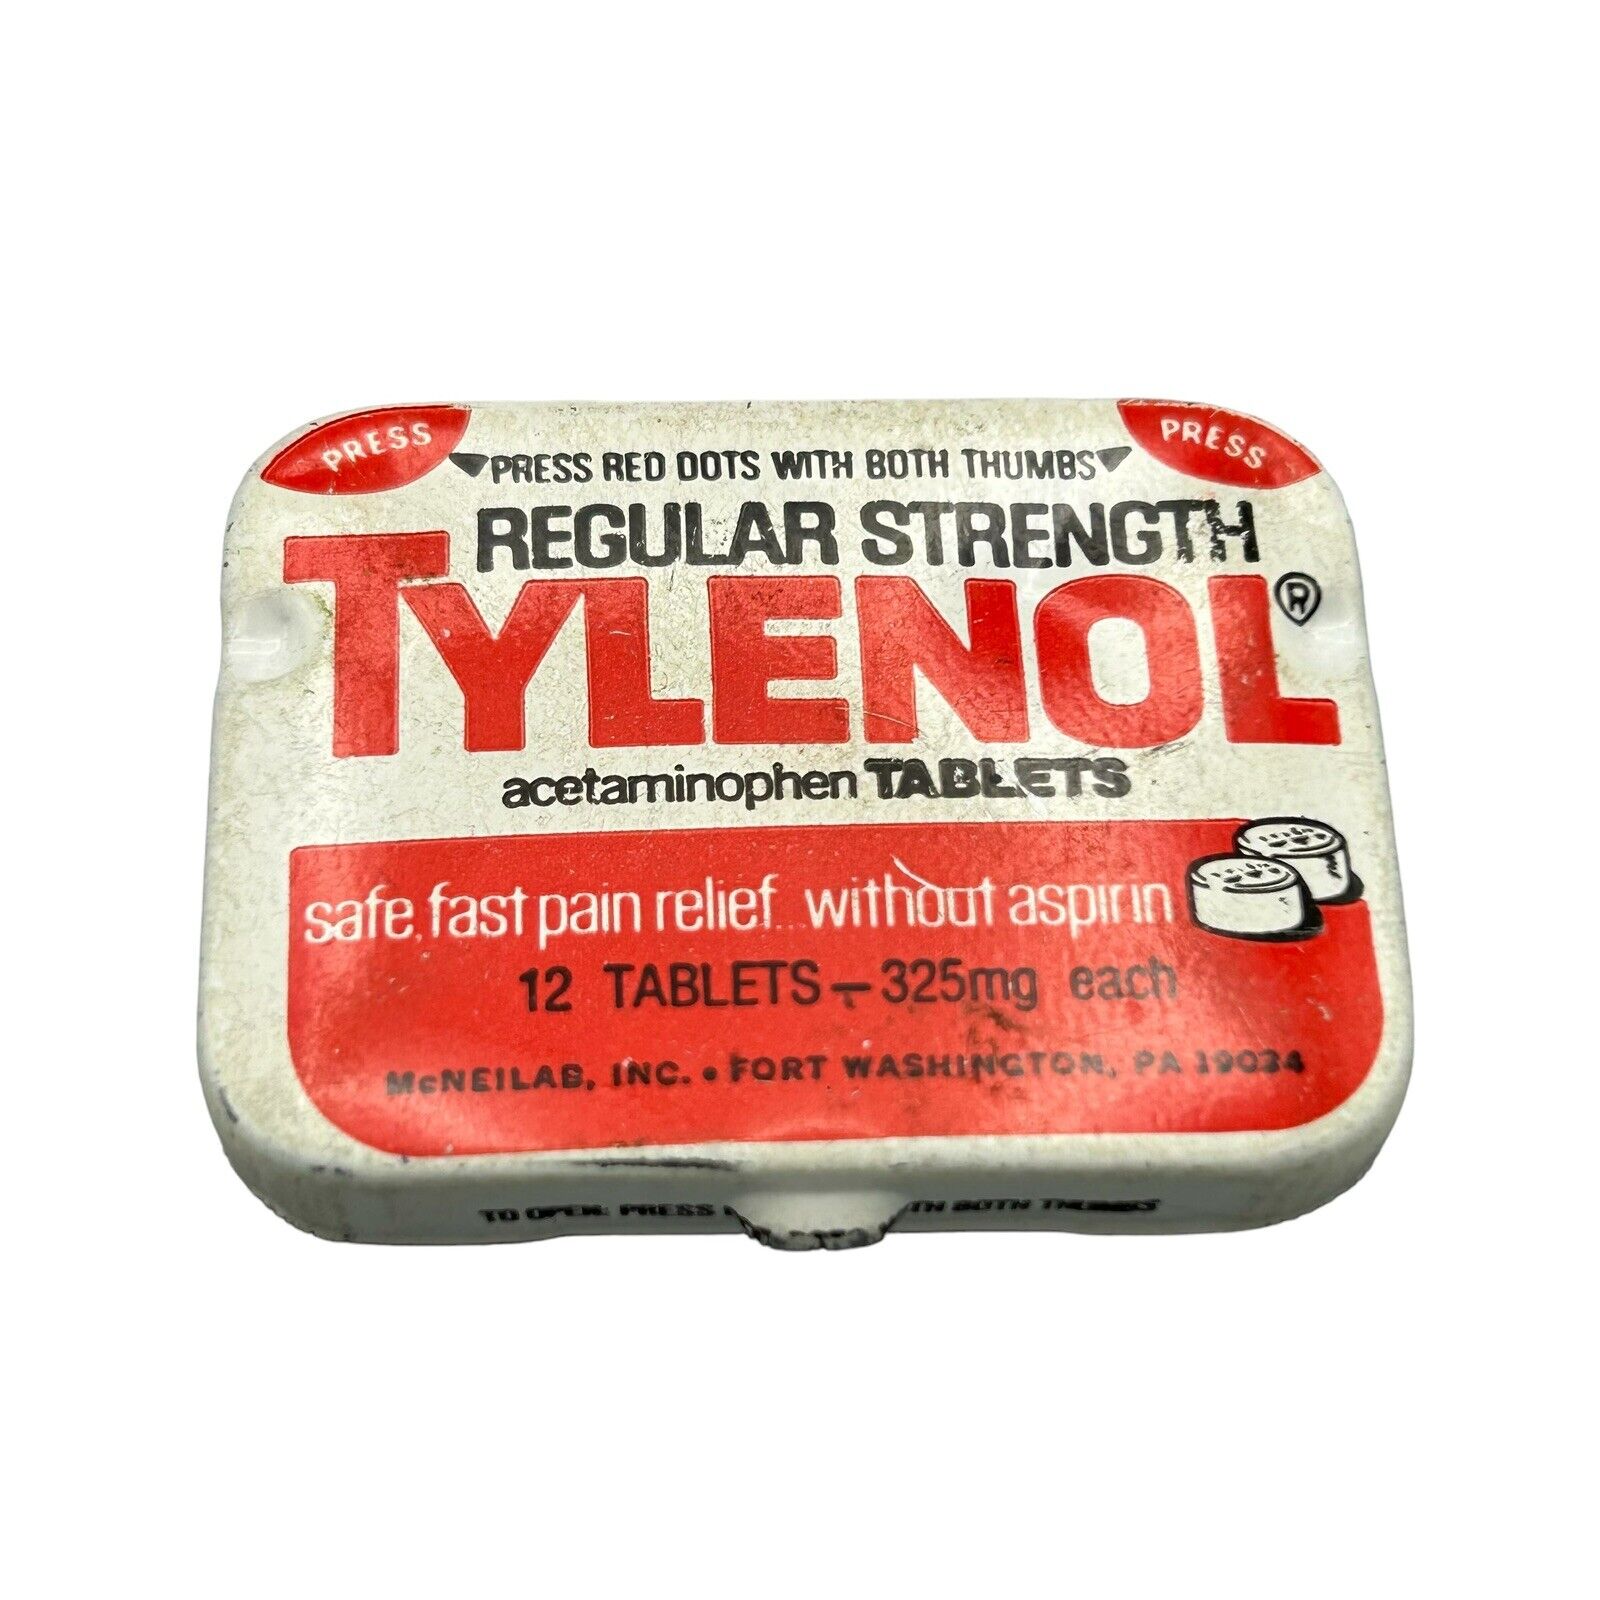 Vintage Tylenol Medicine Tin 12 Tablets Empty Good Condition Ships Quickly